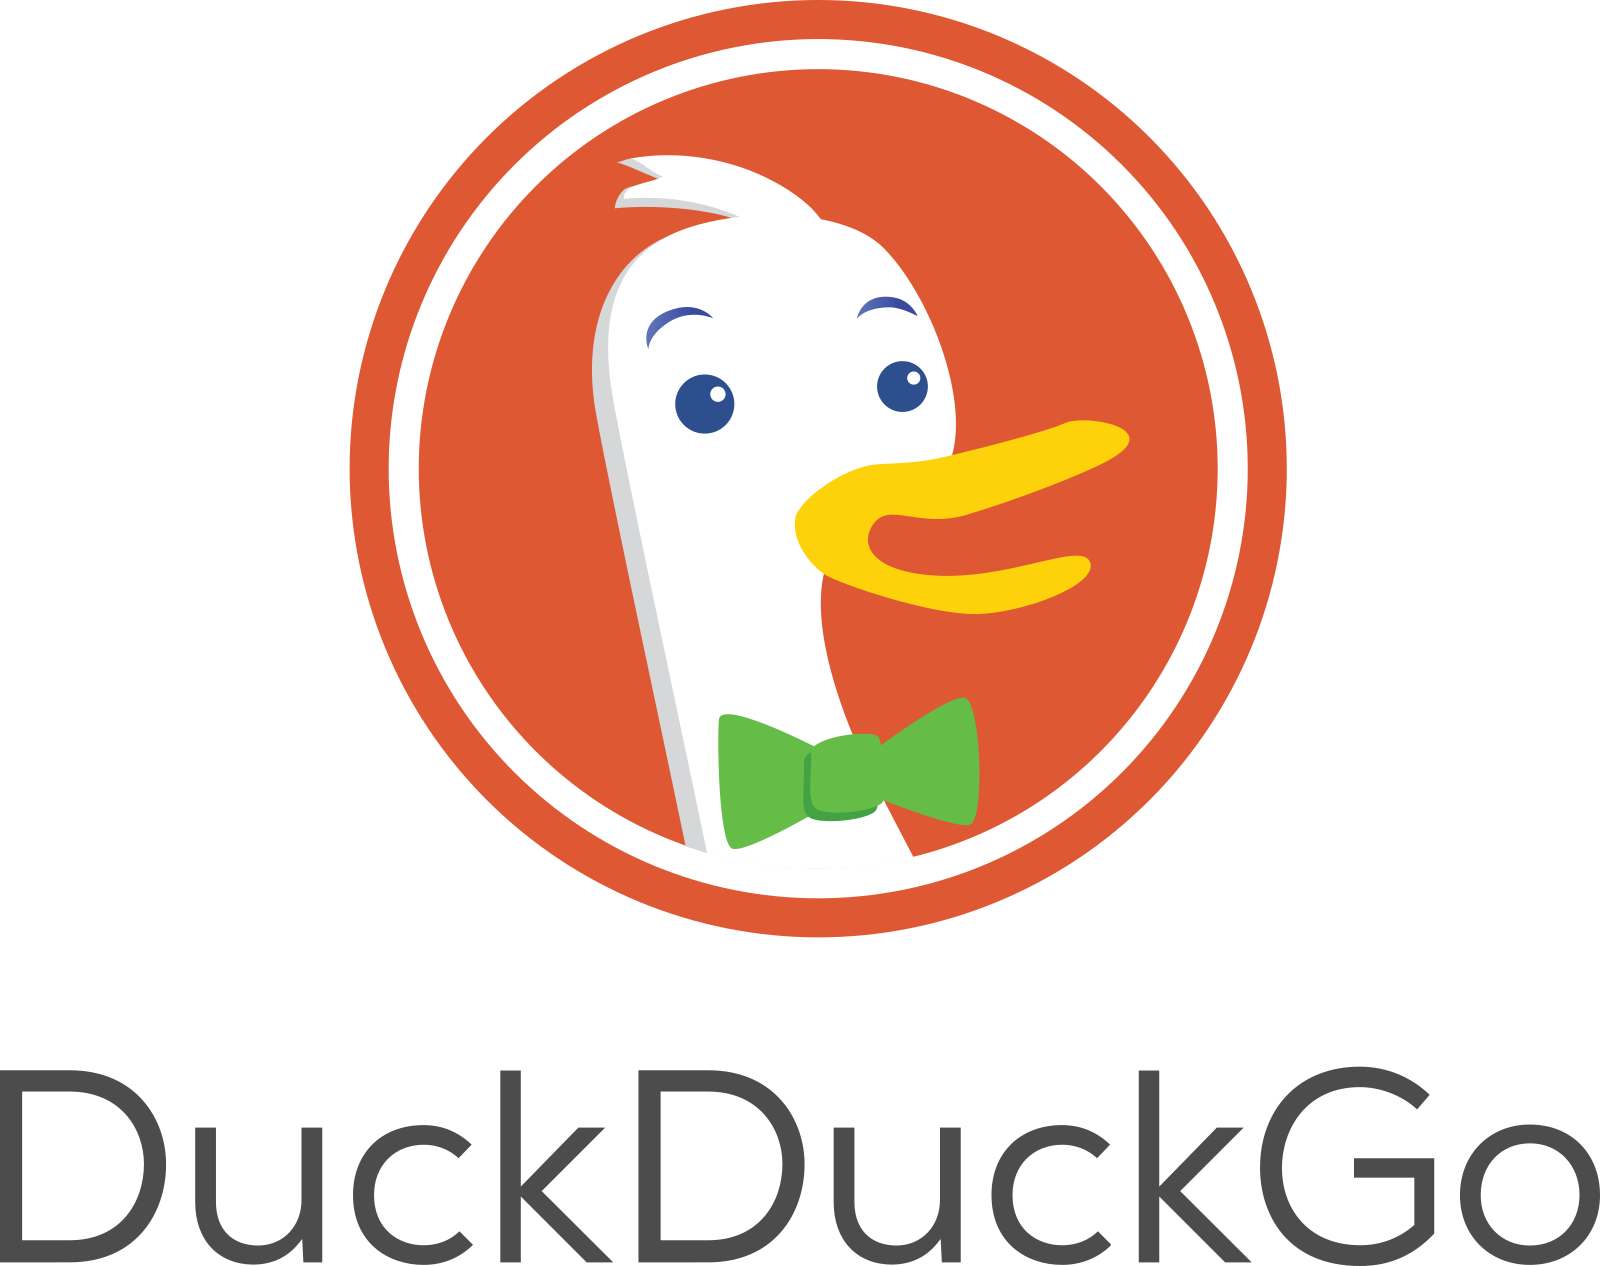 DuckDuck Go logo.